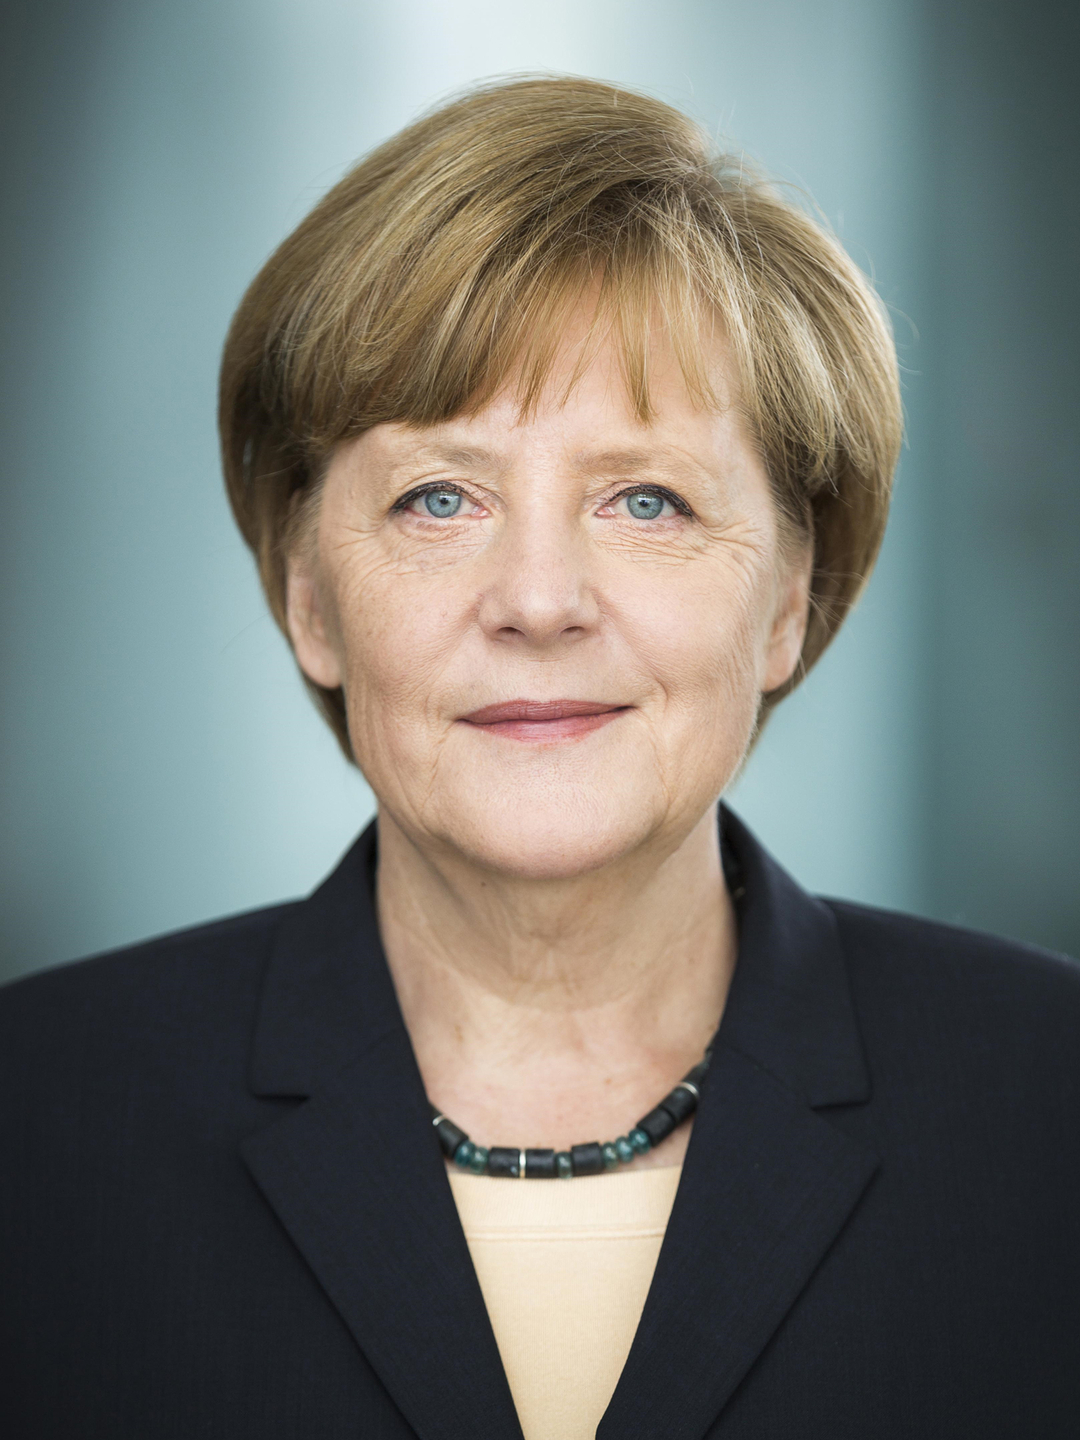 Angela Merkel family